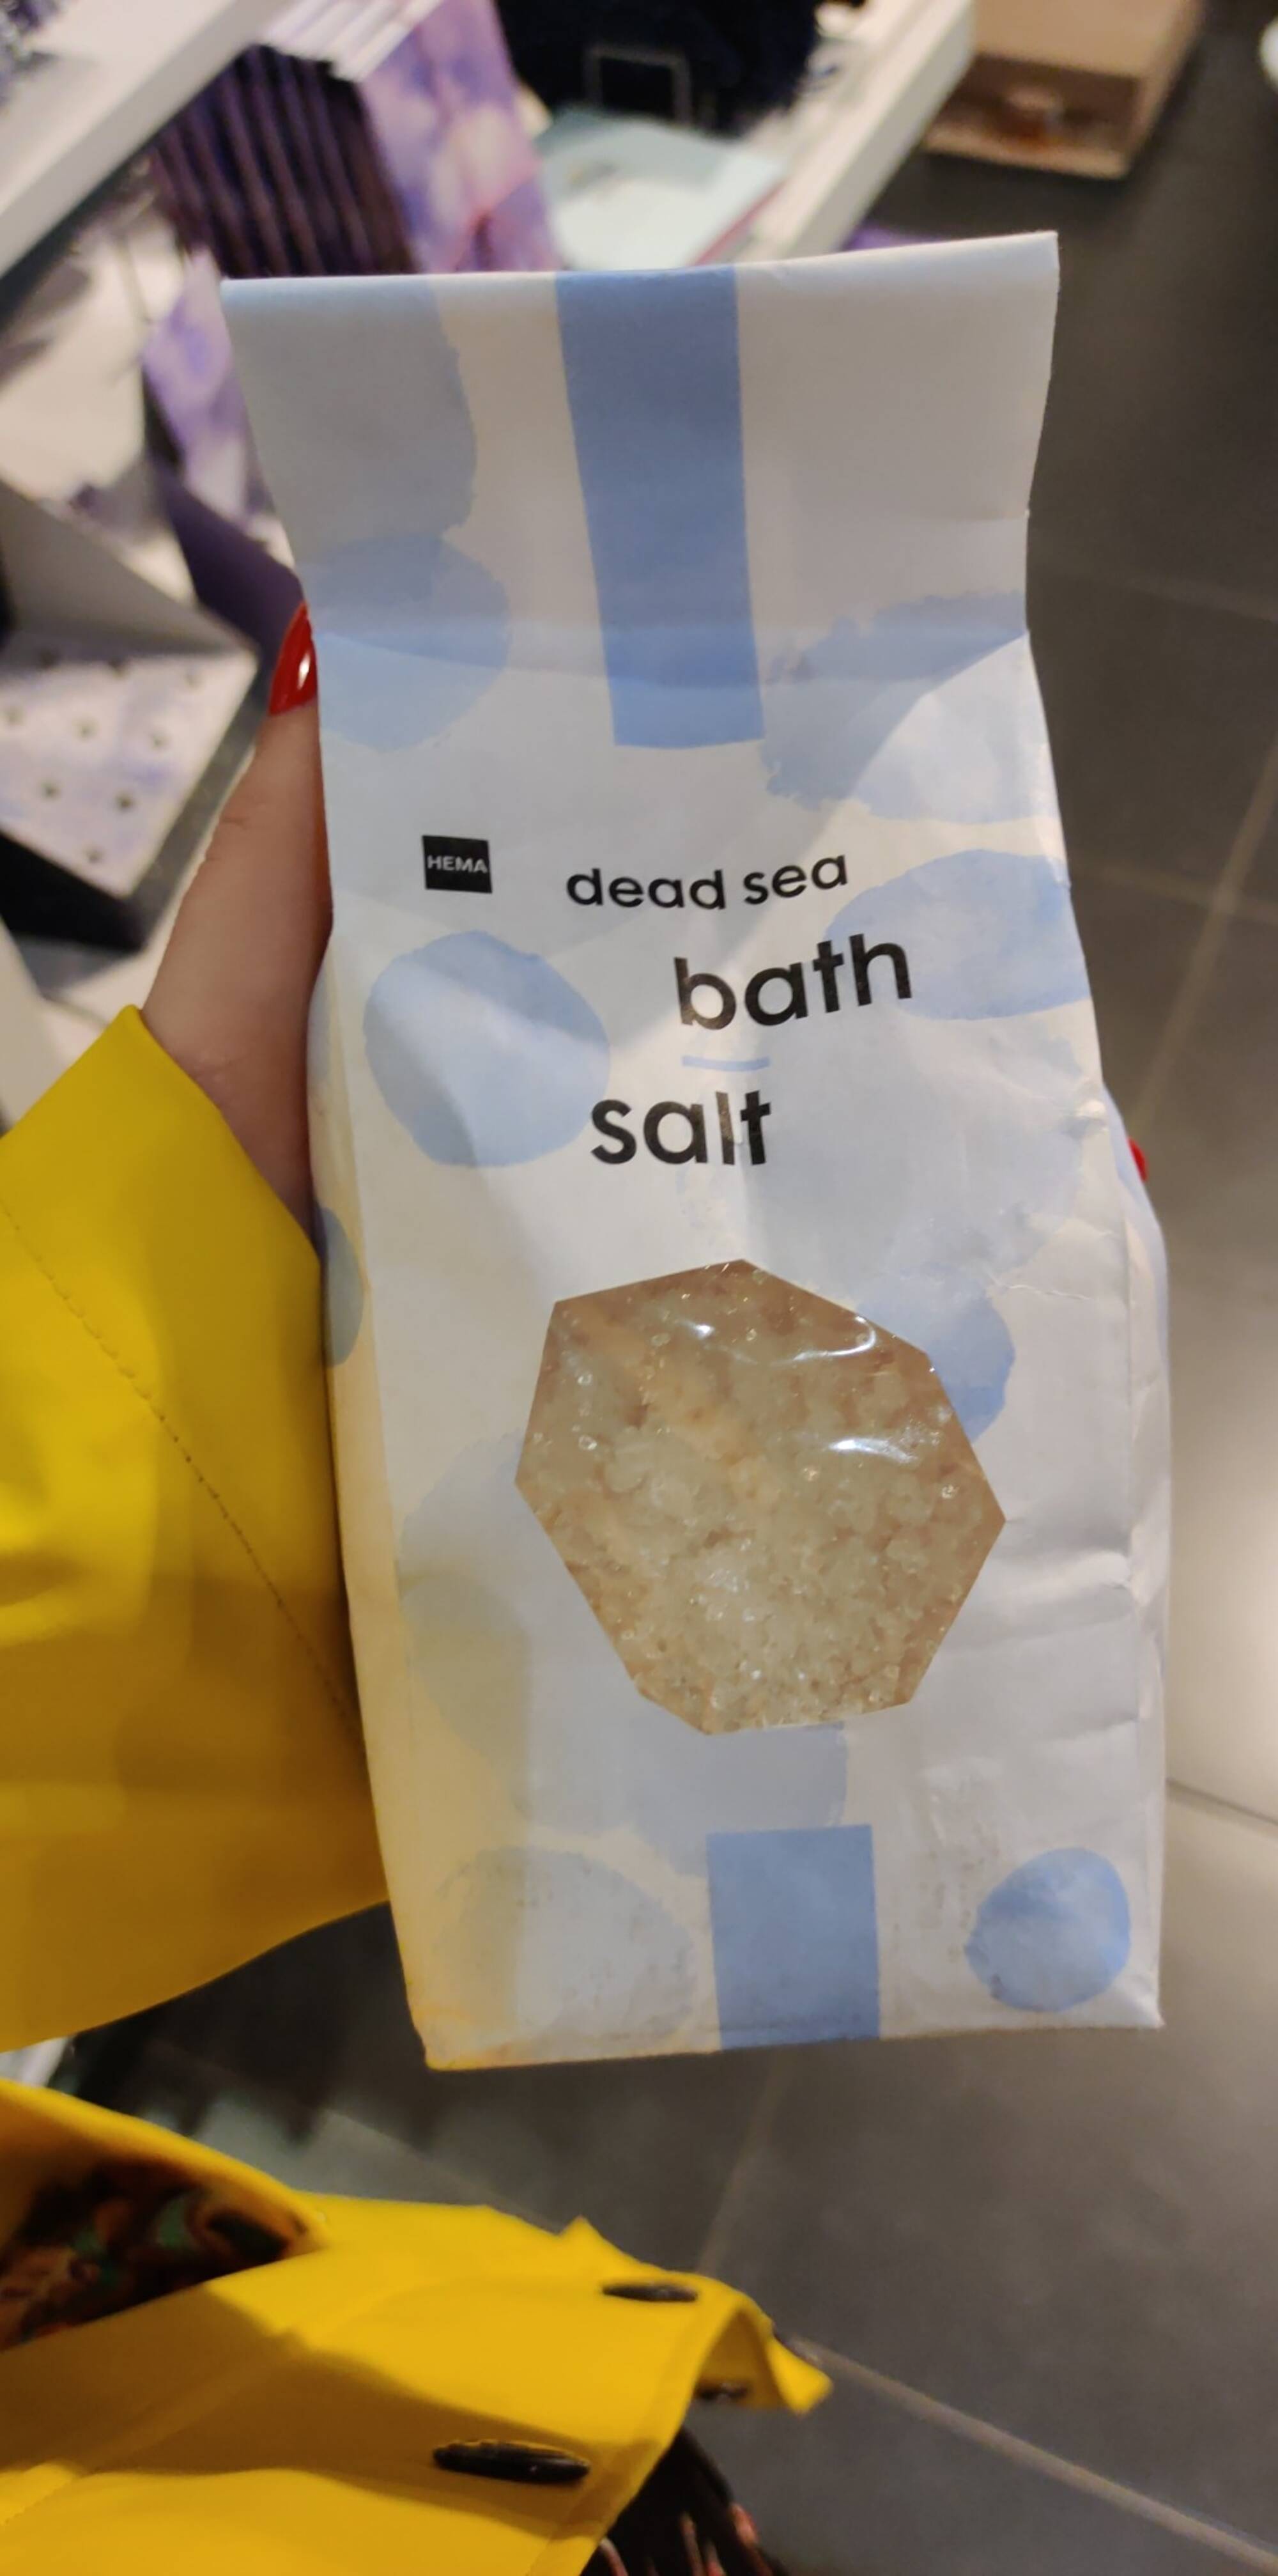 HEMA - Dead sea - Bath salt